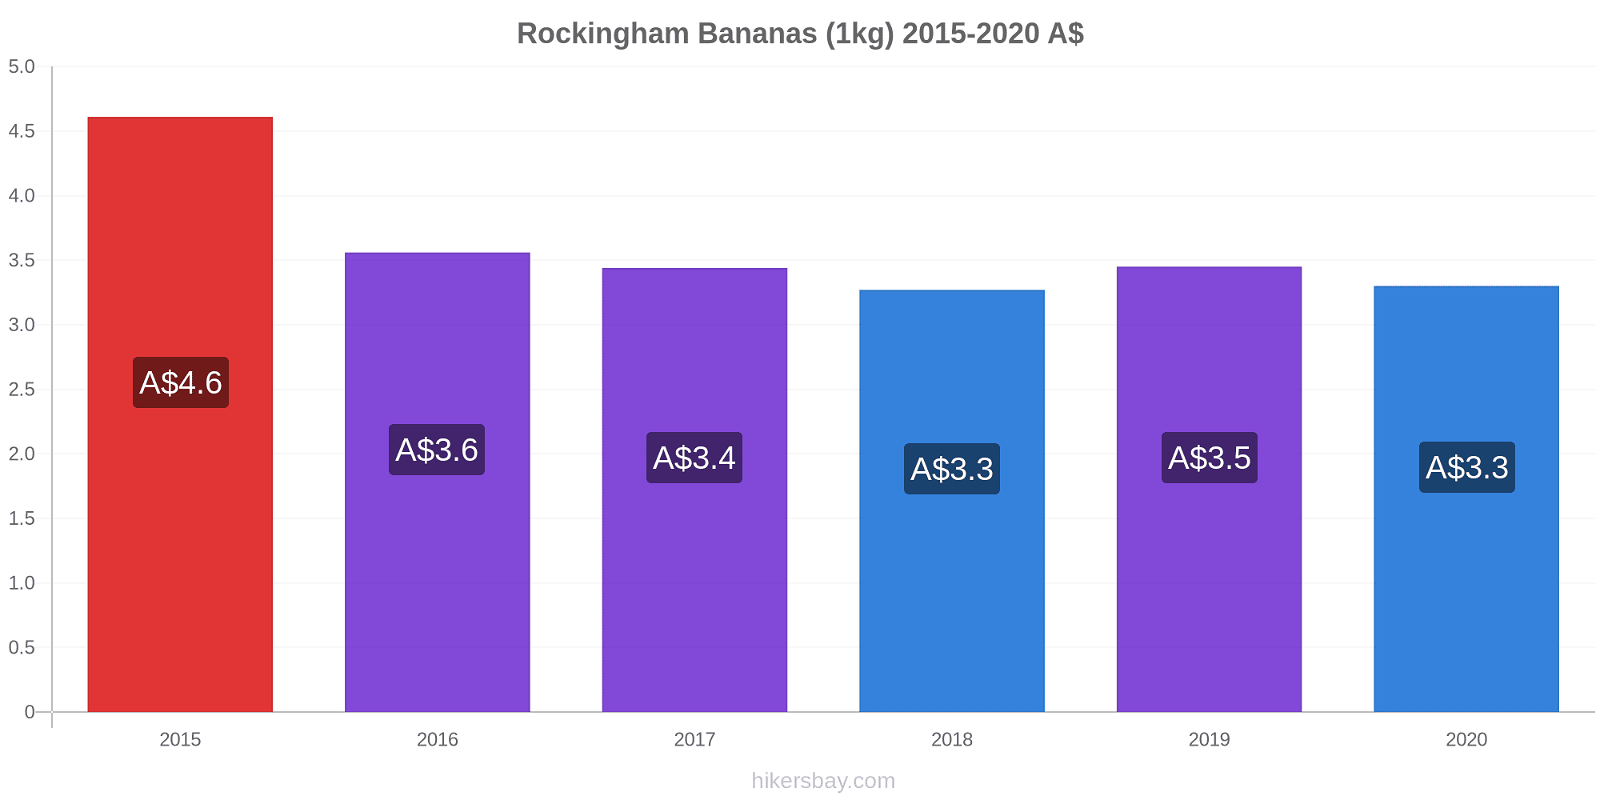 Rockingham price changes Bananas (1kg) hikersbay.com